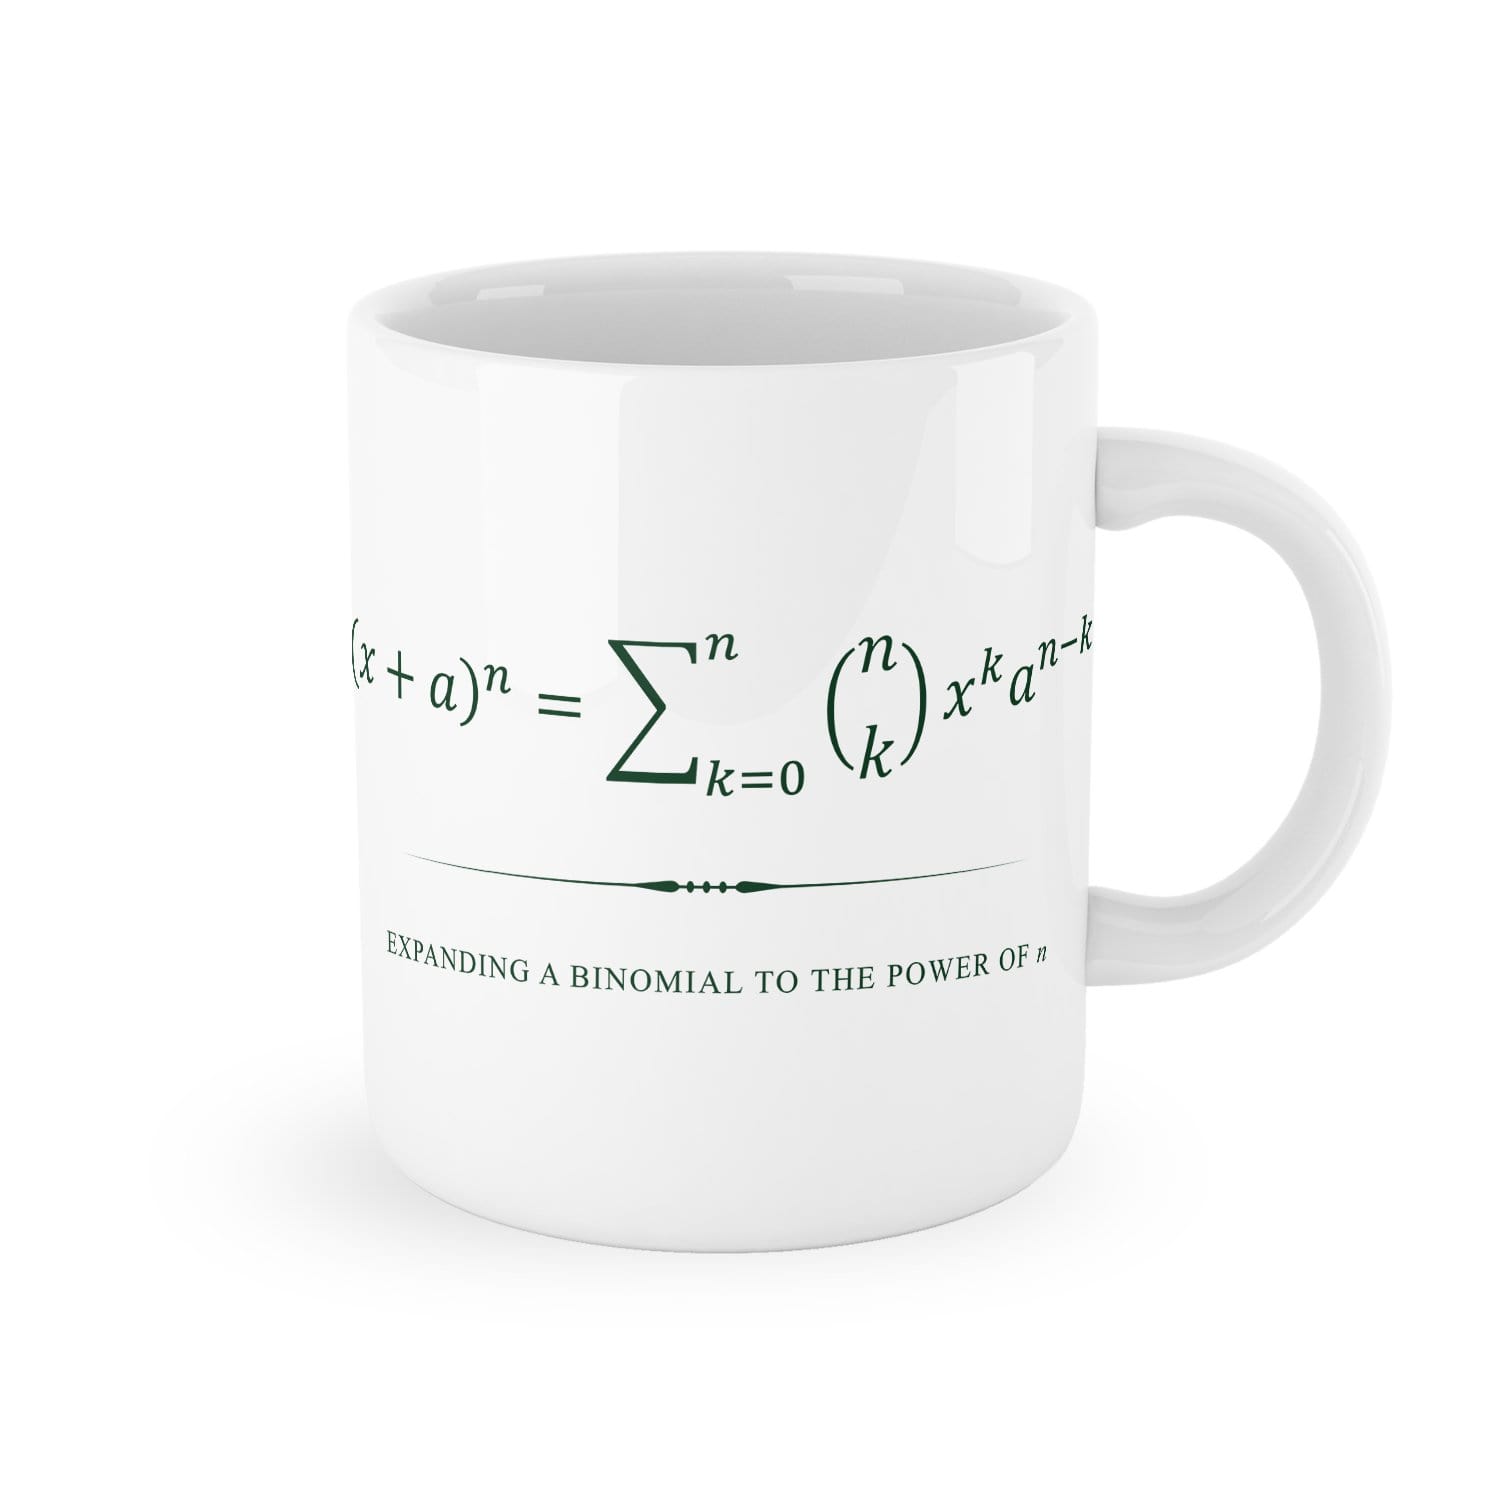 Binomial Theorem White Mug